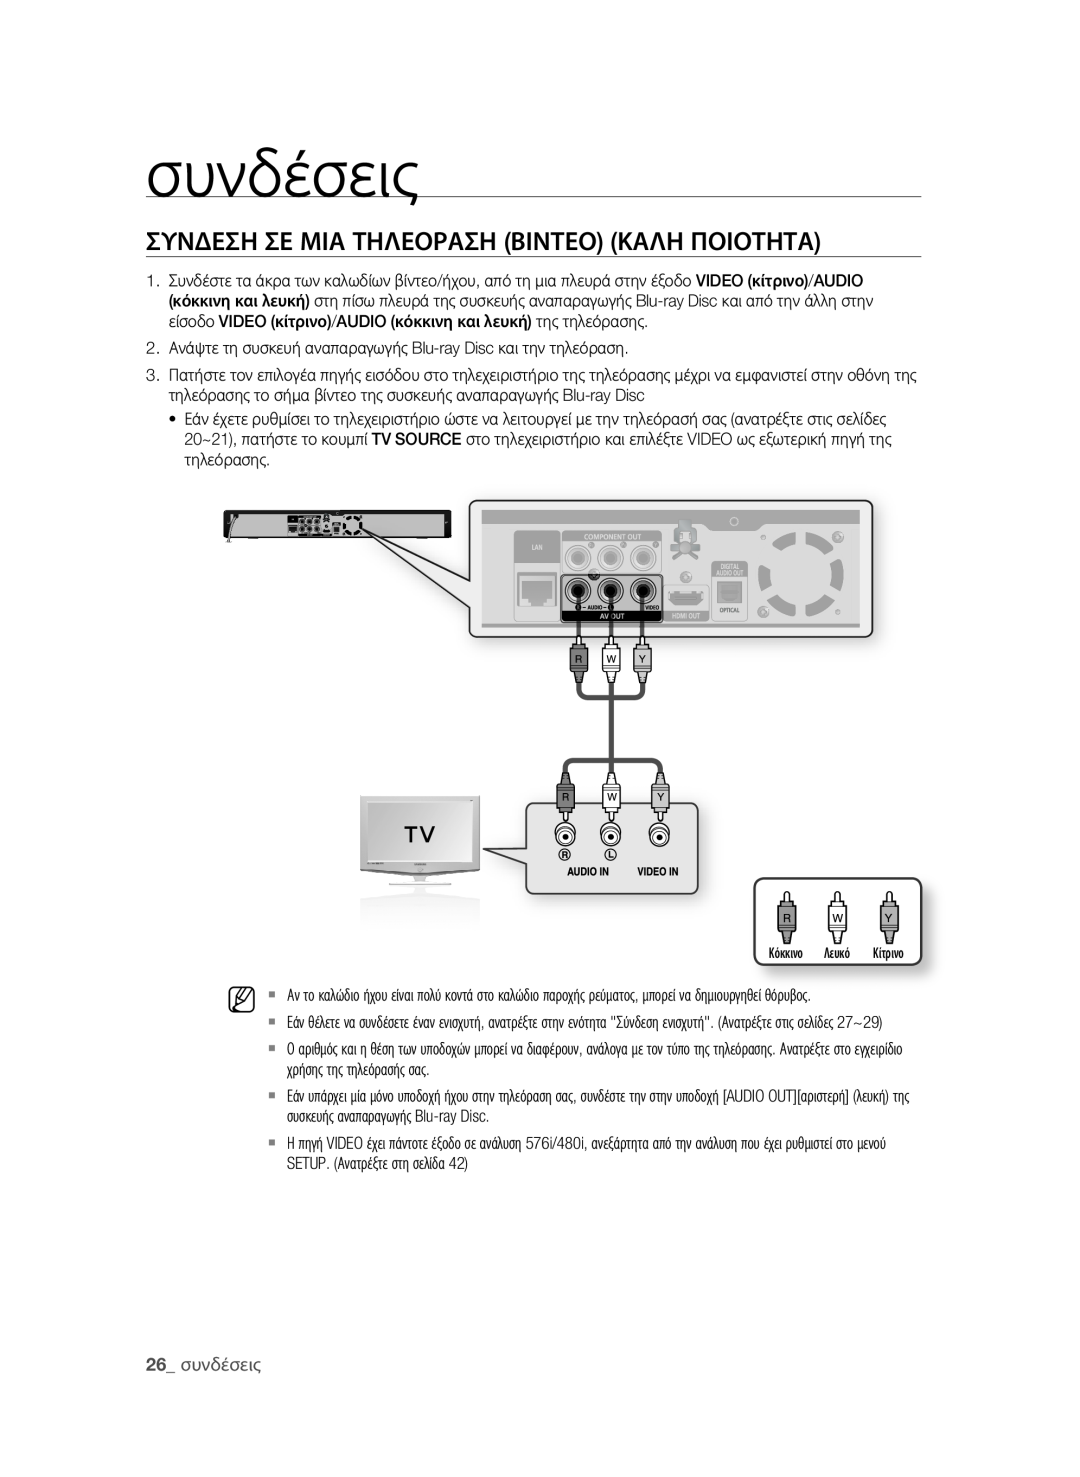 Samsung BD-P1580/EDC manual σΥΝδεση σε ΜιΑ ΤηΛεορΑση βιΝΤεο ΚΑΛη ΠοιοΤηΤΑ, 2 συνδέσεις 